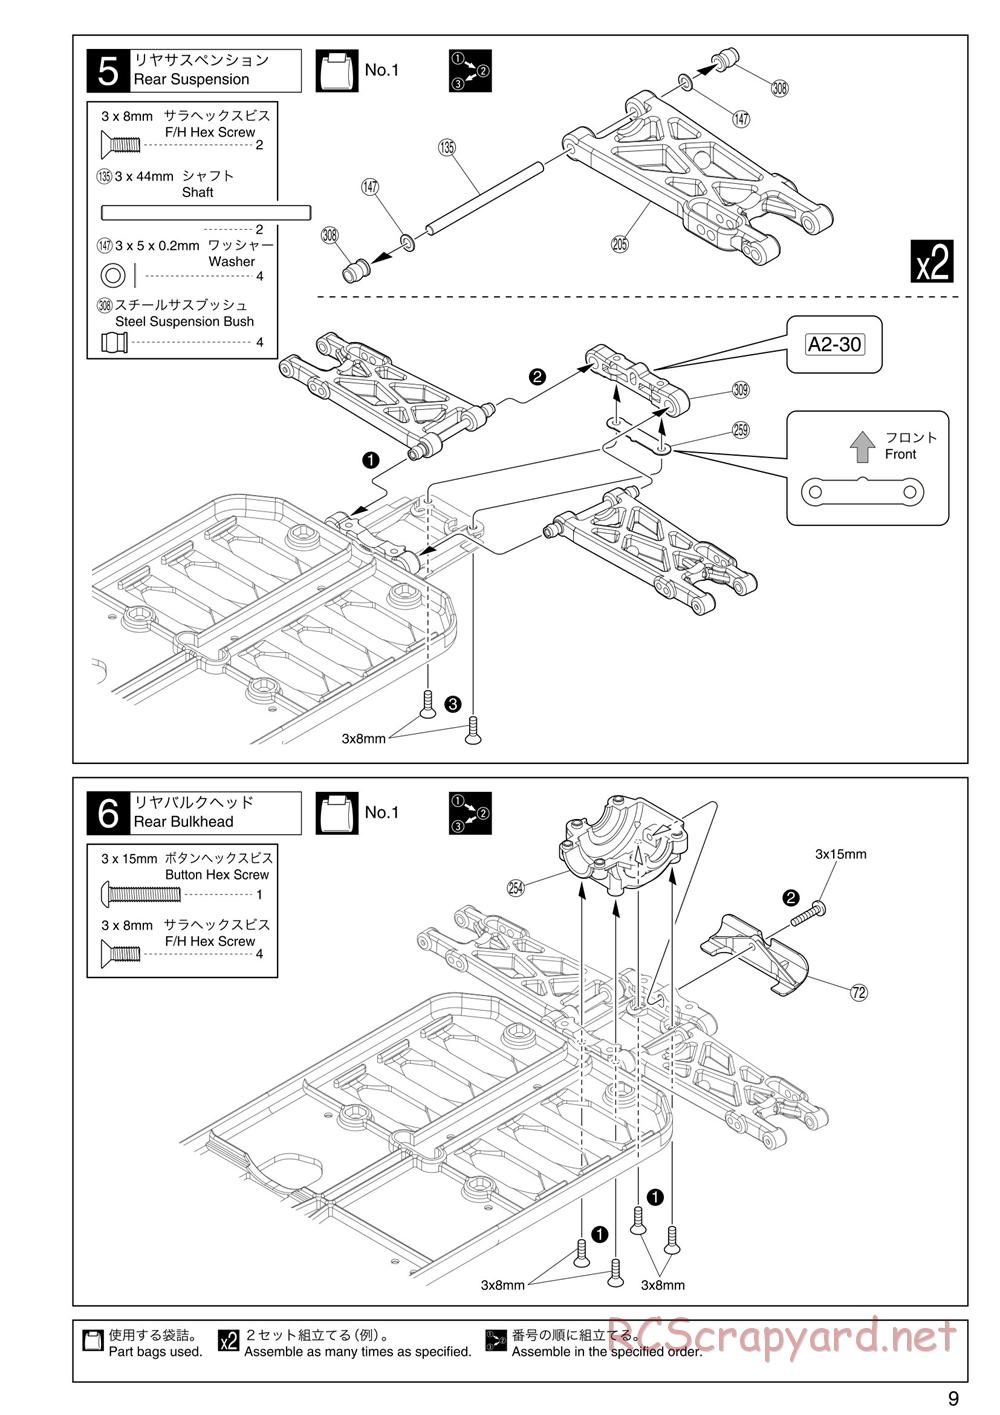 Kyosho - Lazer ZX-5 FS - Manual - Page 9